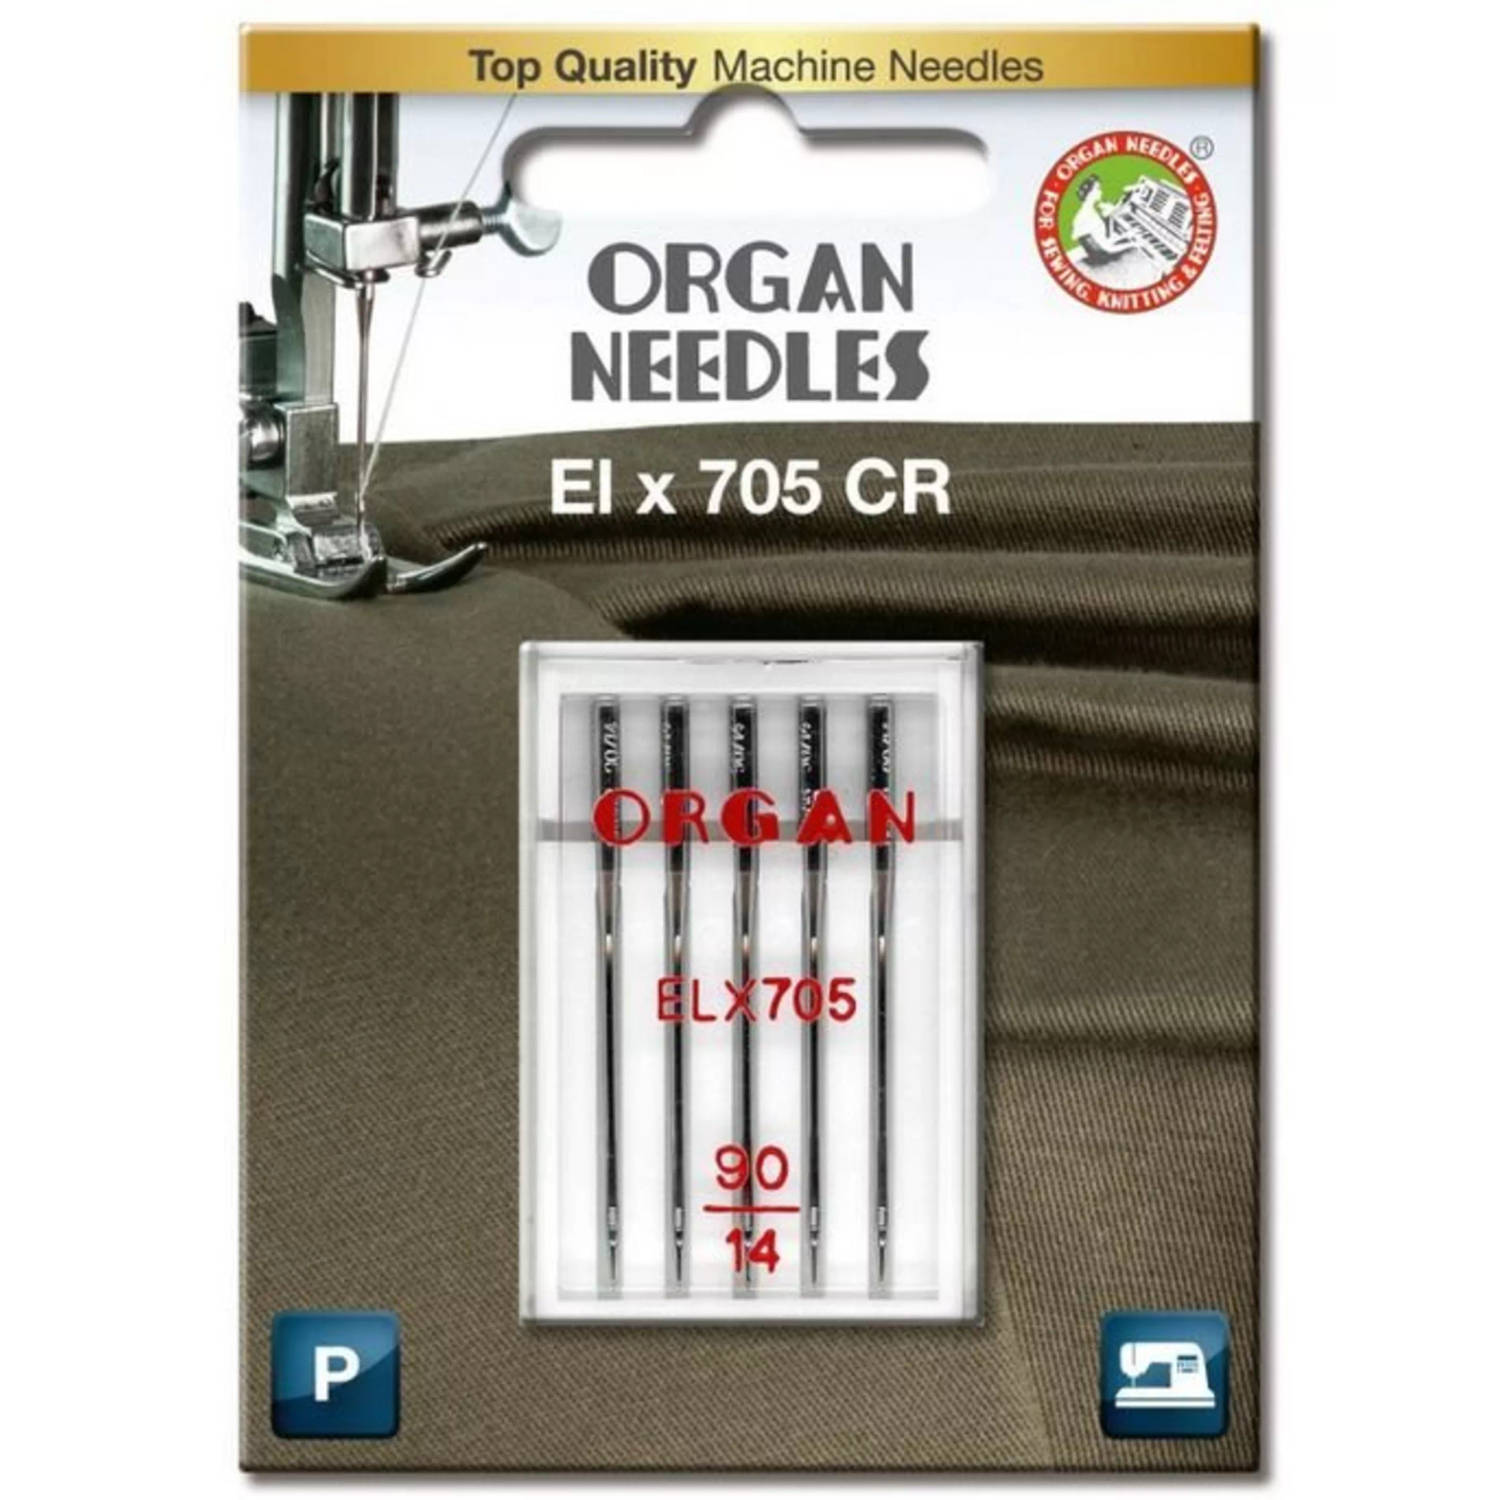 Organ Naalden ELx705CR 90